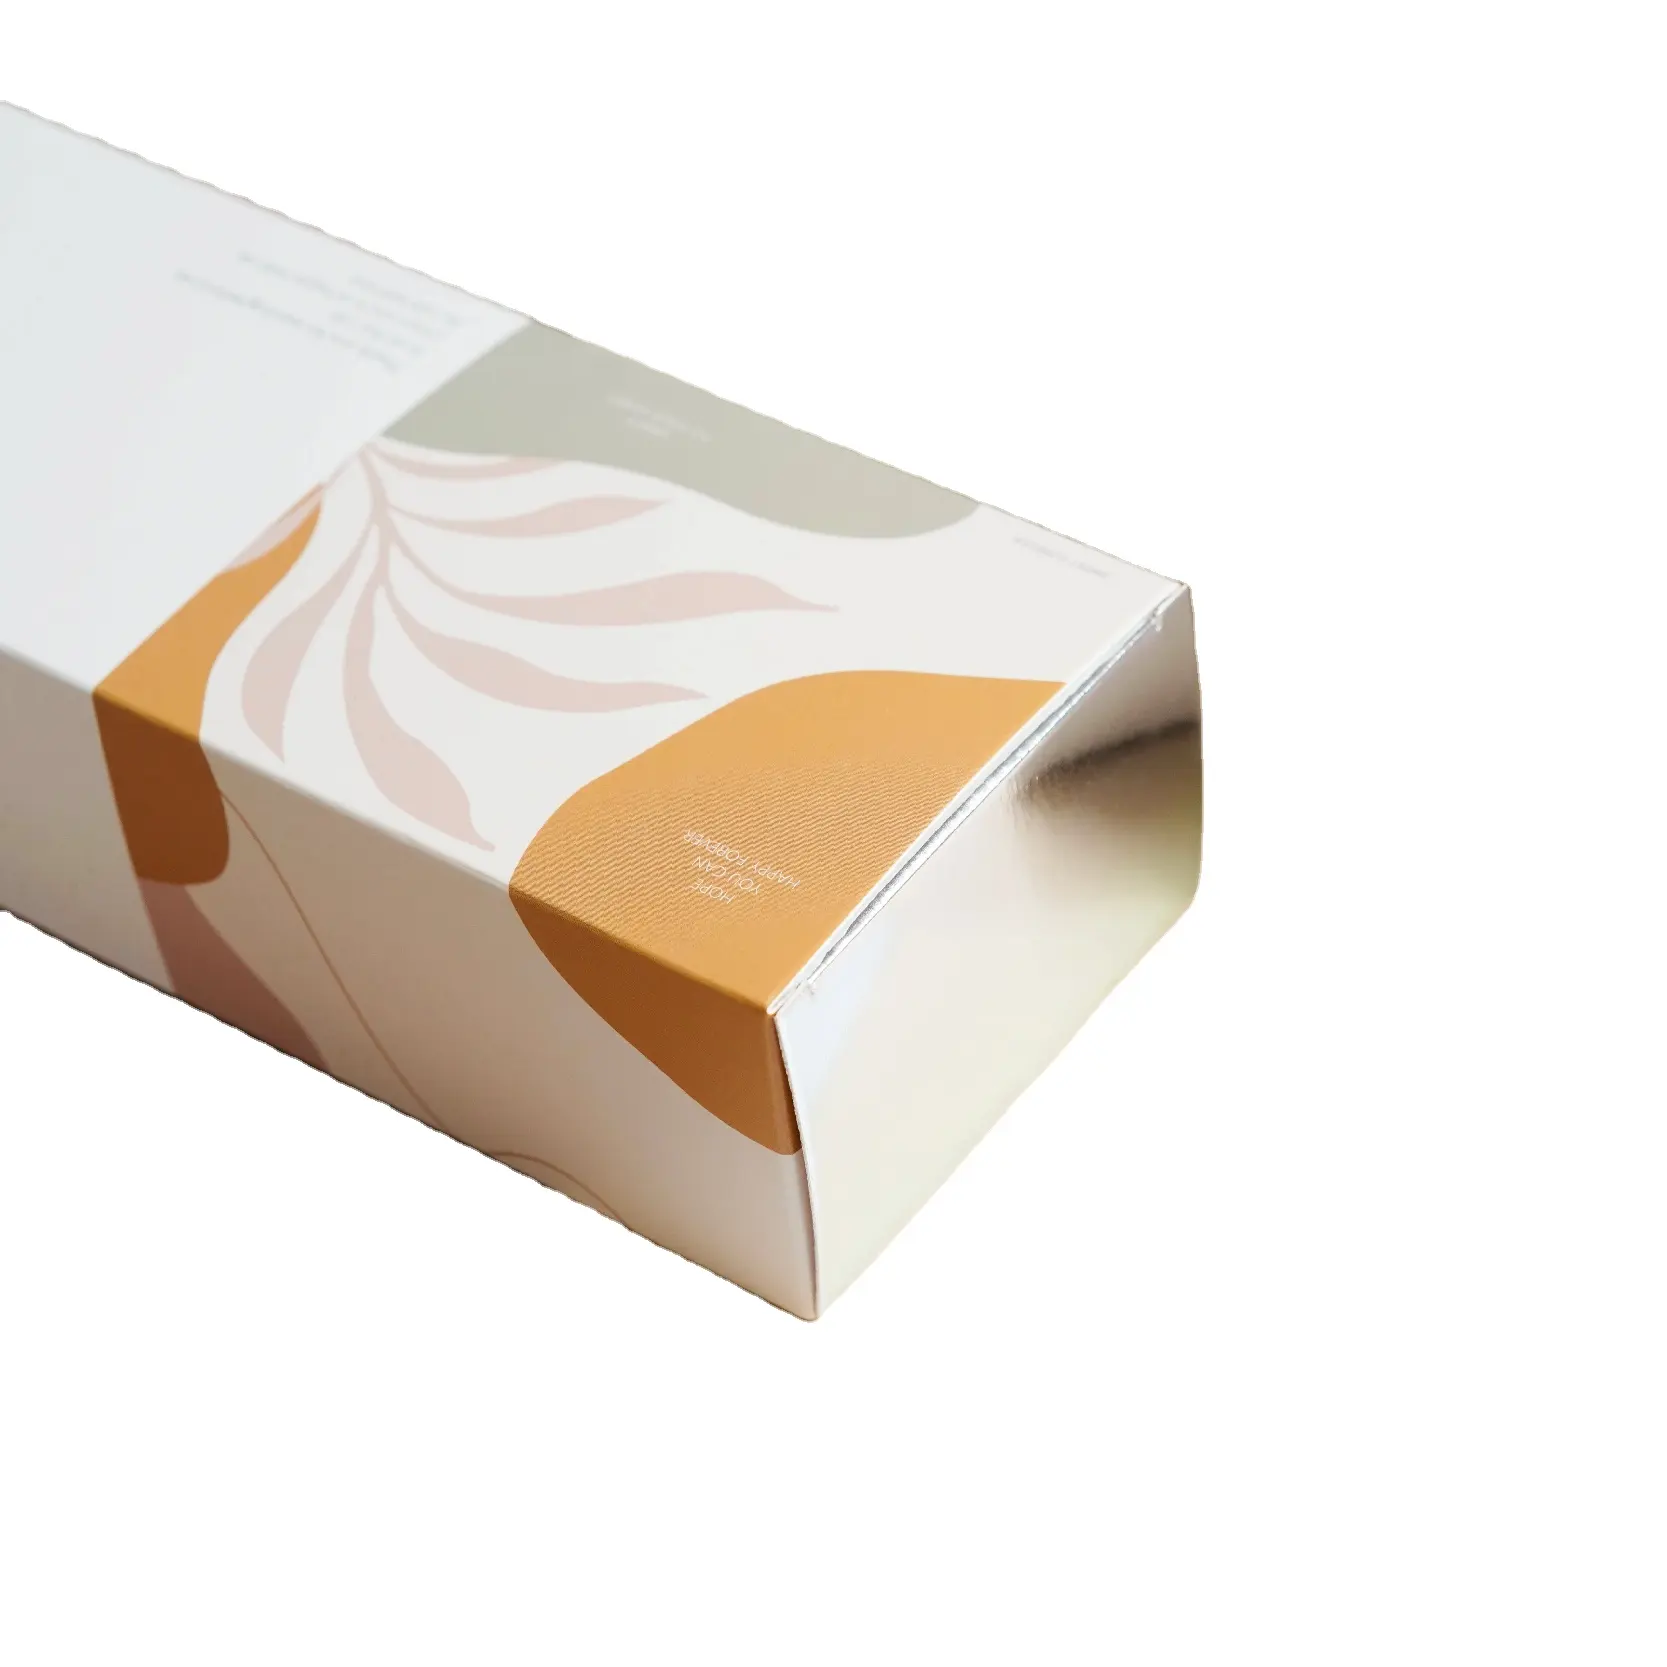 Karton Kustom Mewah Kelas Makanan Mudah Terurai Kotak Kue Kue Kue Macaron Portabel Kemasan Makanan